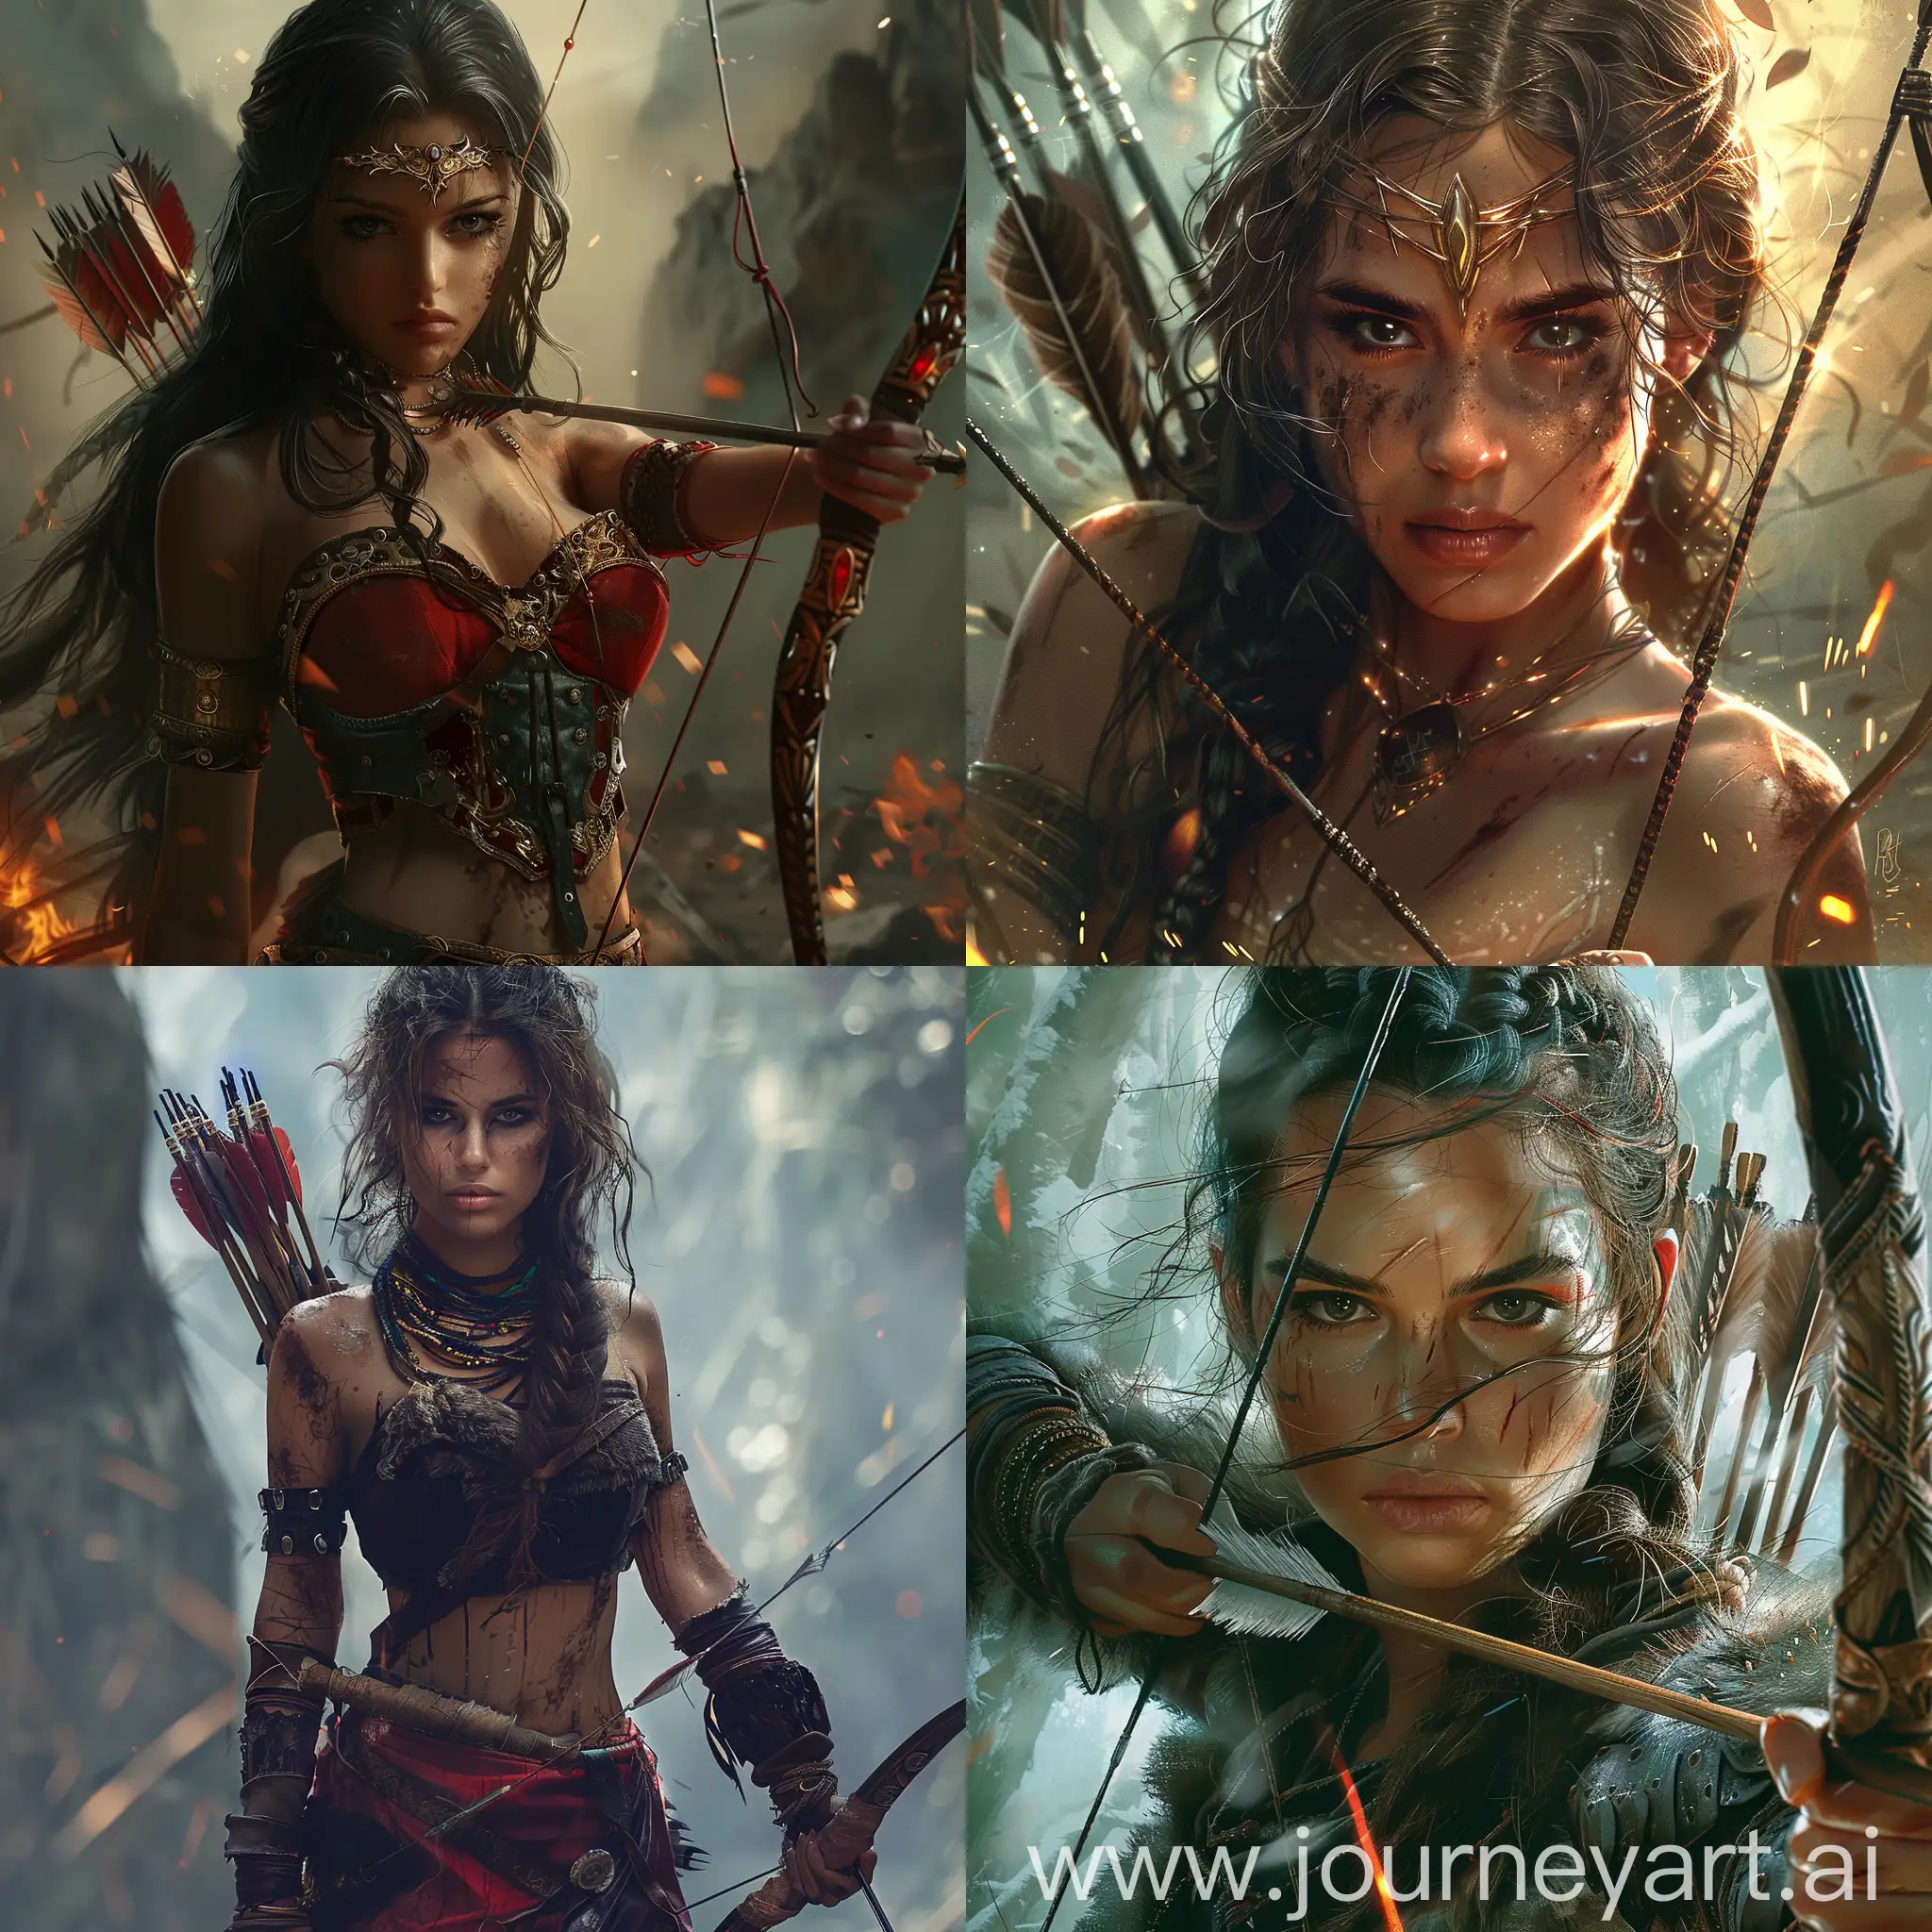 Realistic-Warrior-Girl-with-Arrow